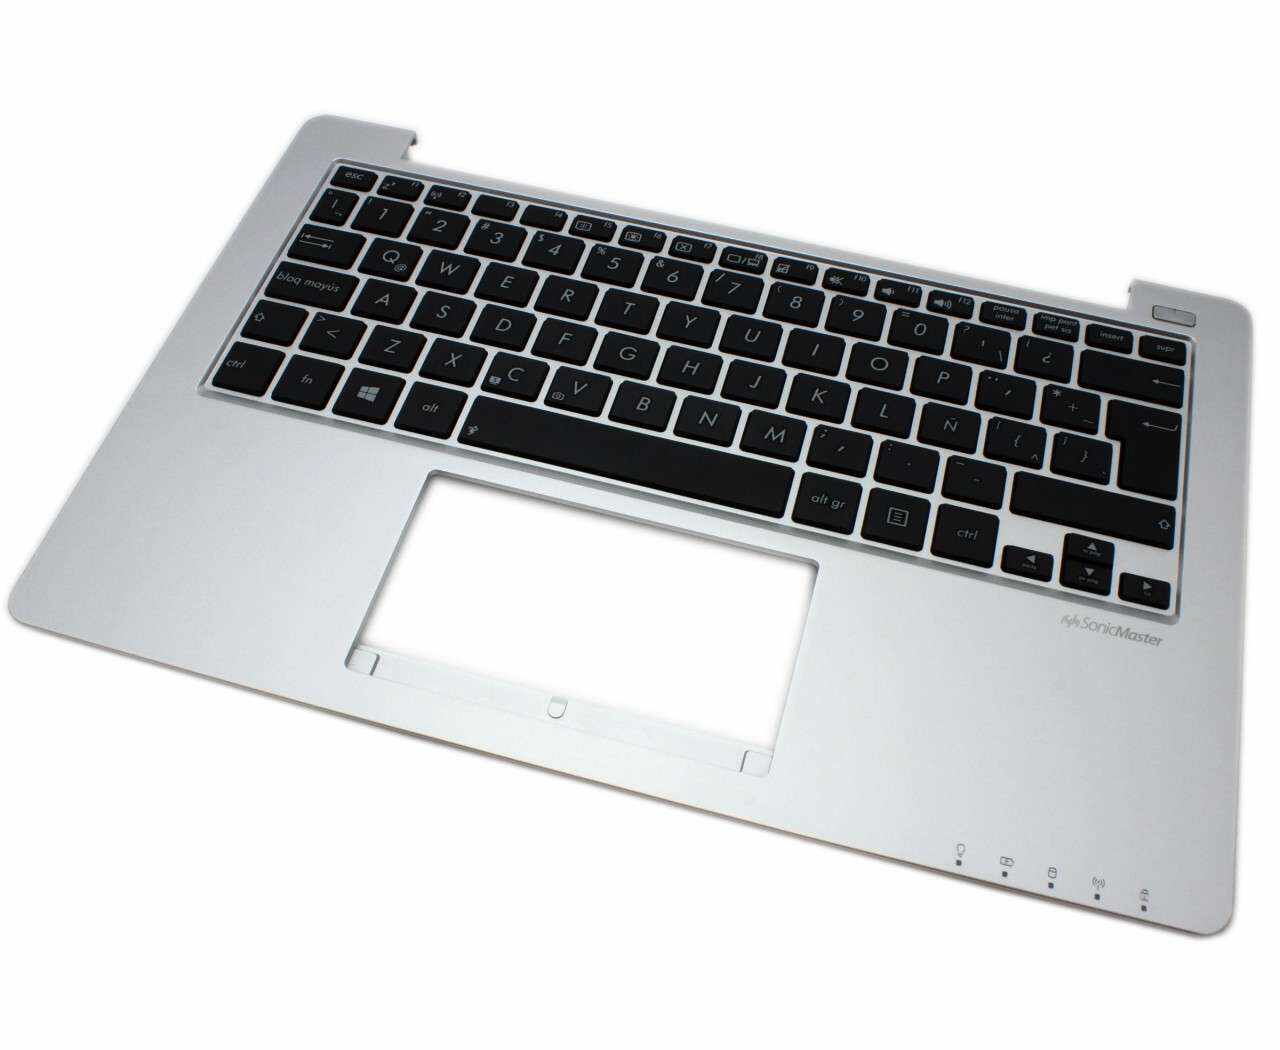 Tastatura Asus VivoBook X202E neagra cu Palmrest argintiu